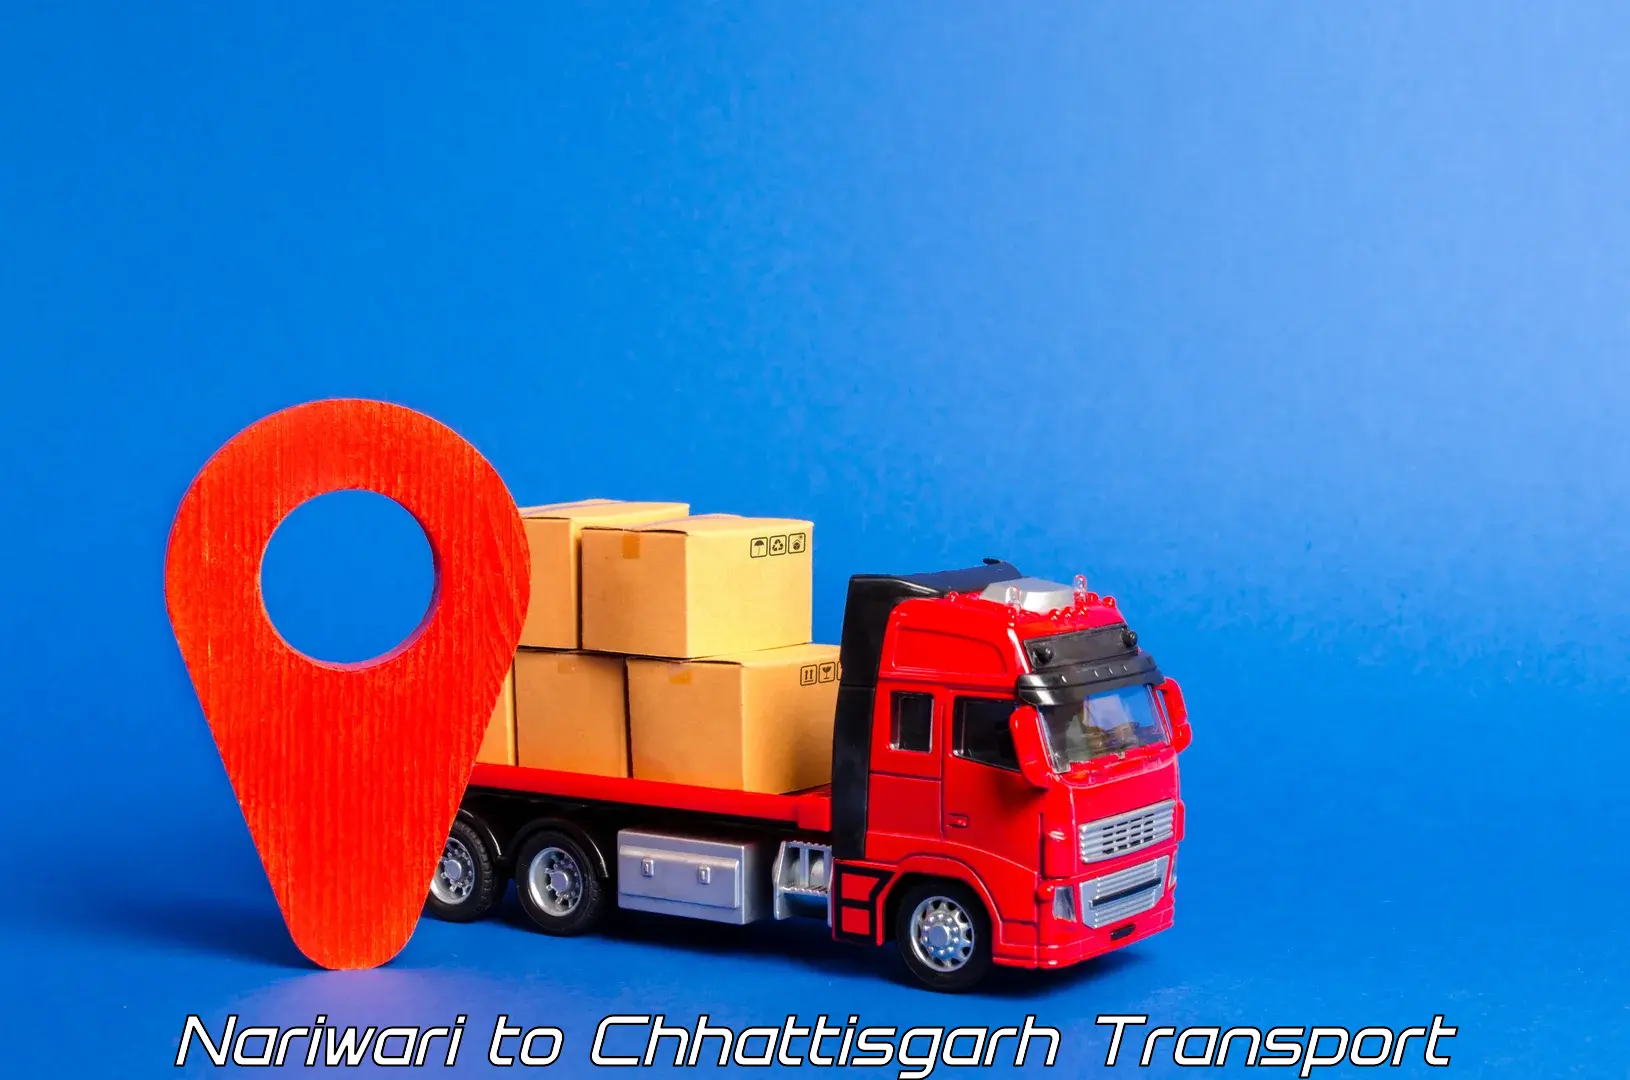 Transport bike from one state to another Nariwari to Chhattisgarh